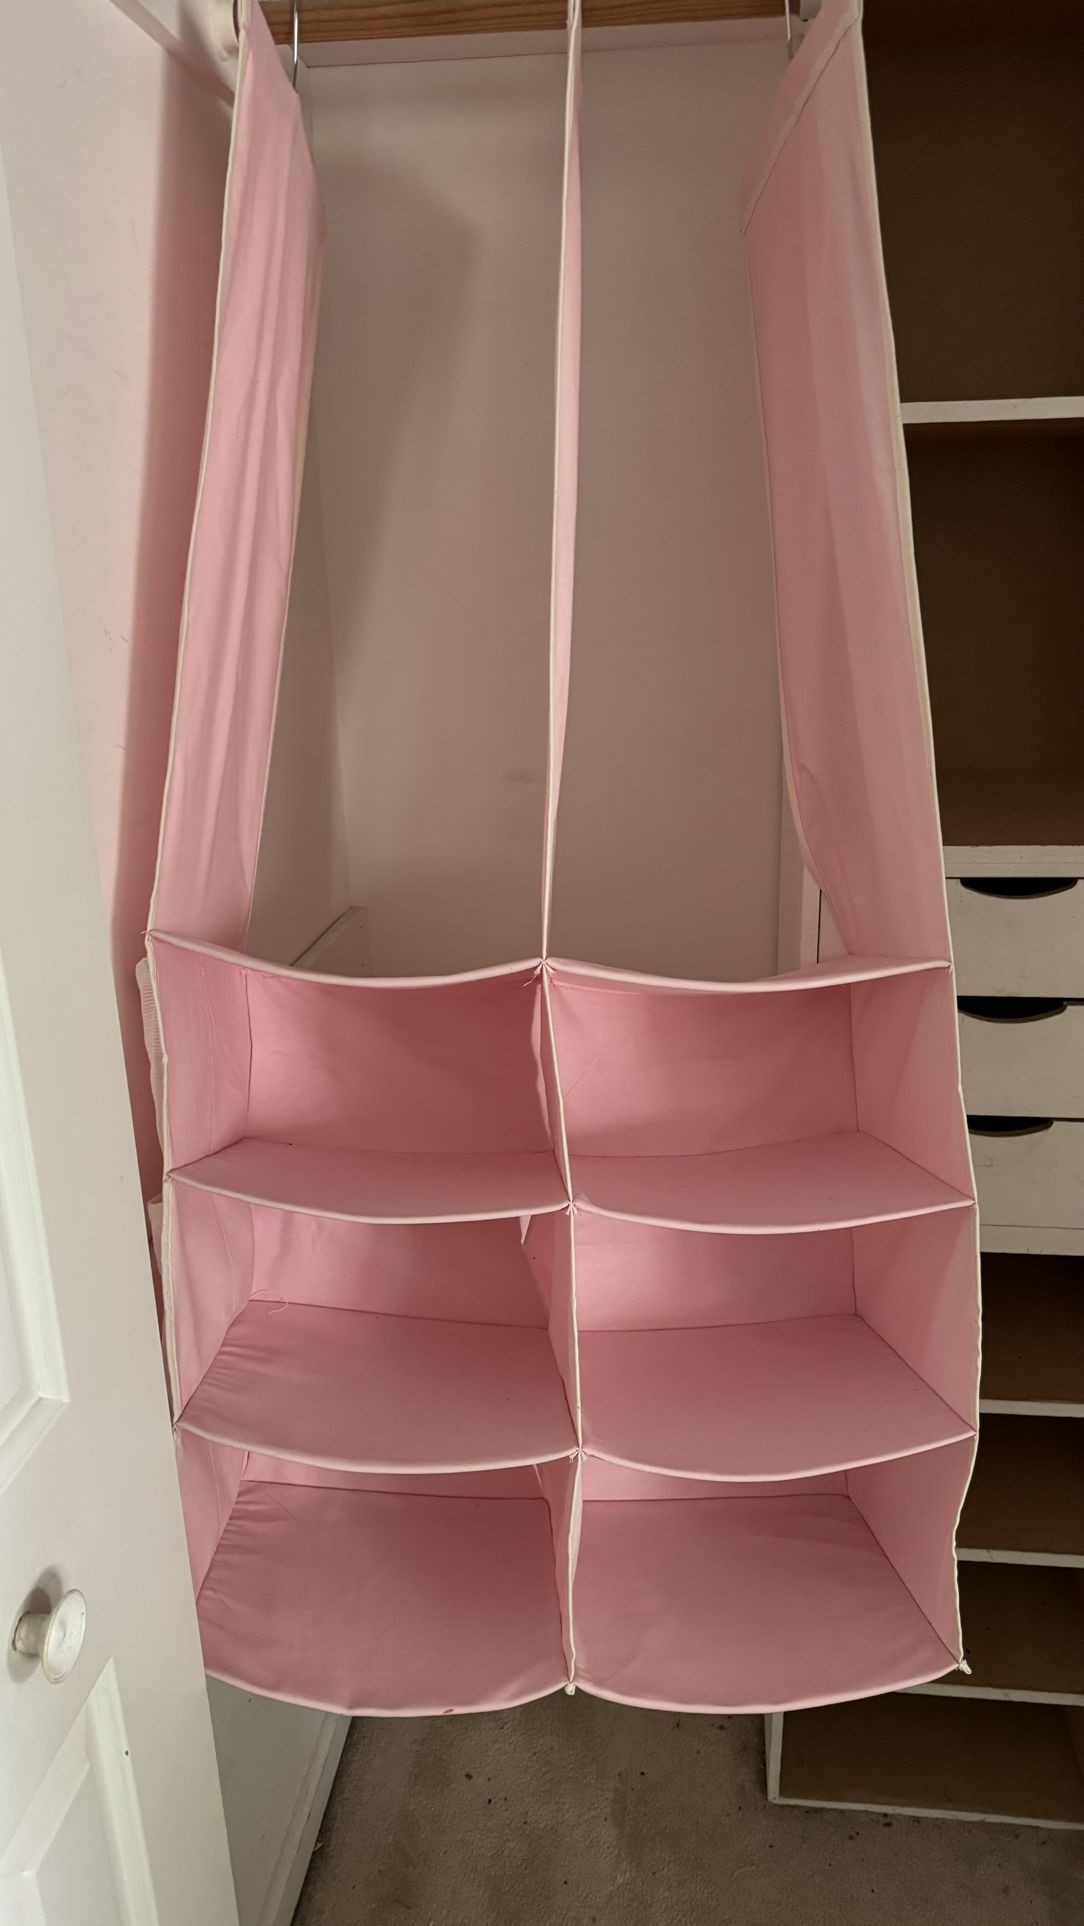 Super Adorable Pink and white closet Organizer